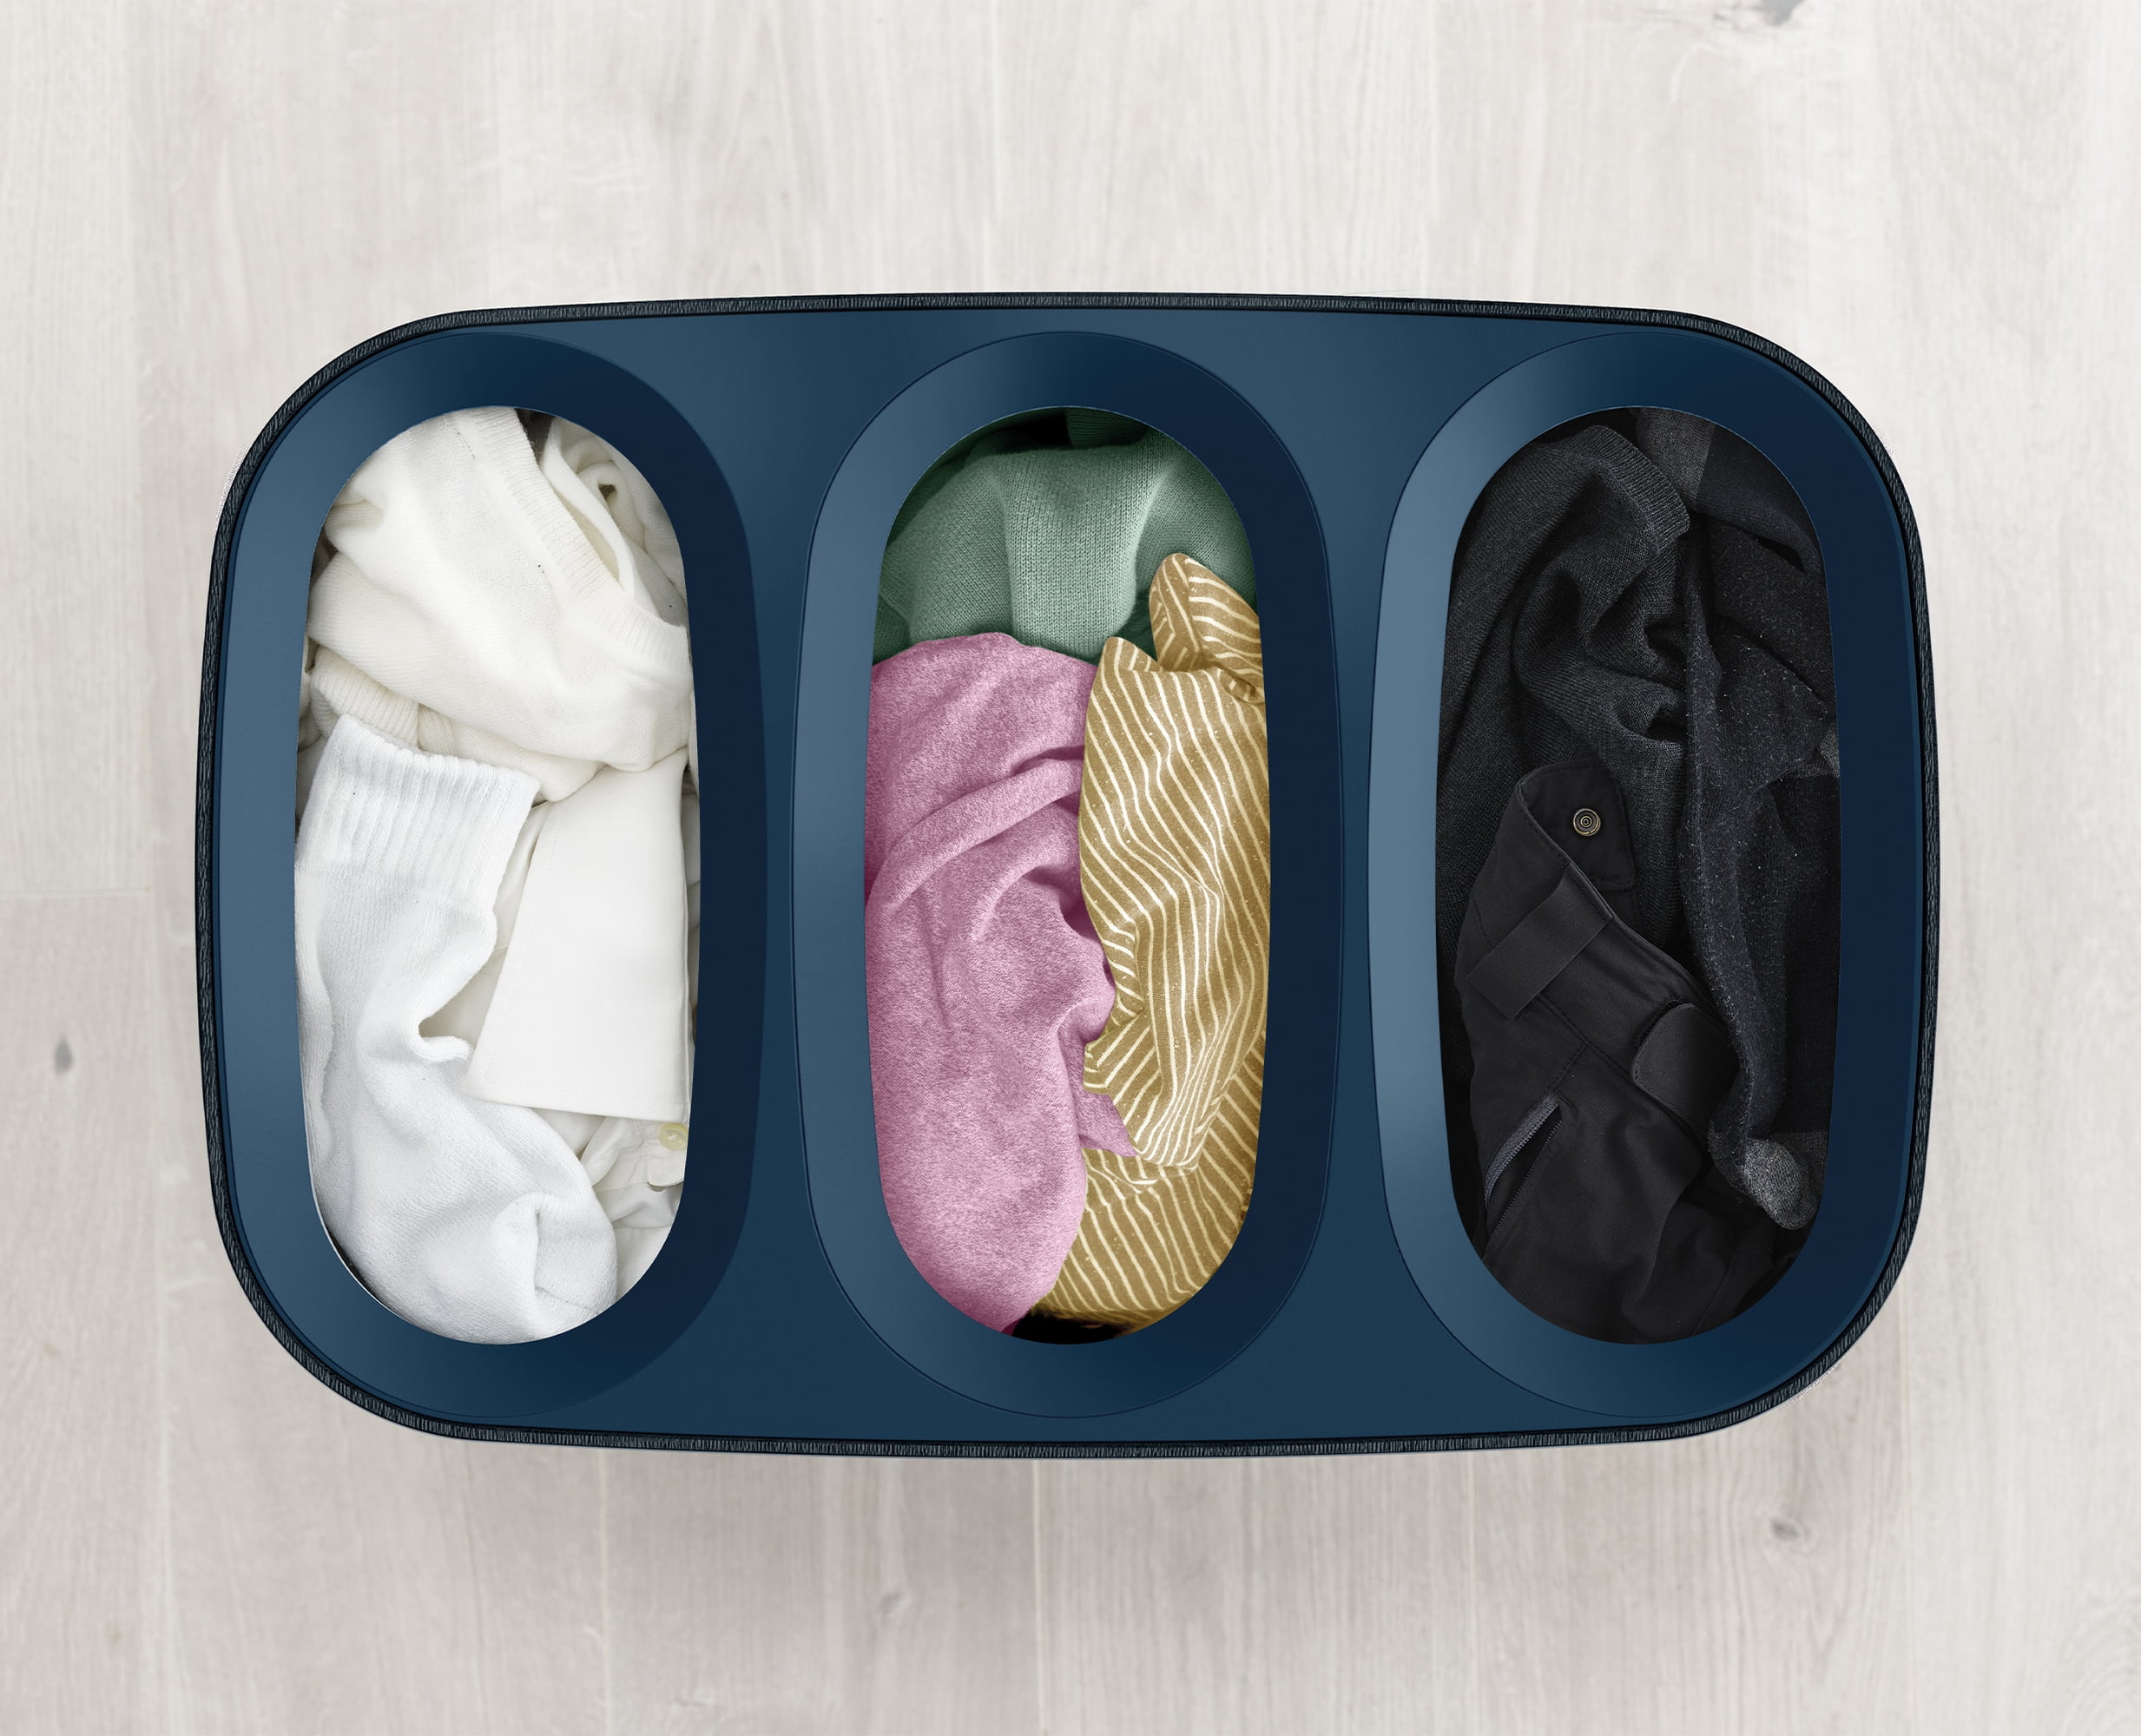  Joseph Joseph Tota - Trio - Cesta separadora de ropa sucia de  90 litros con tapa, 3 bolsas de lavado extraíbles con asas, color crudo y  plegable que ahorra espacio, tabla